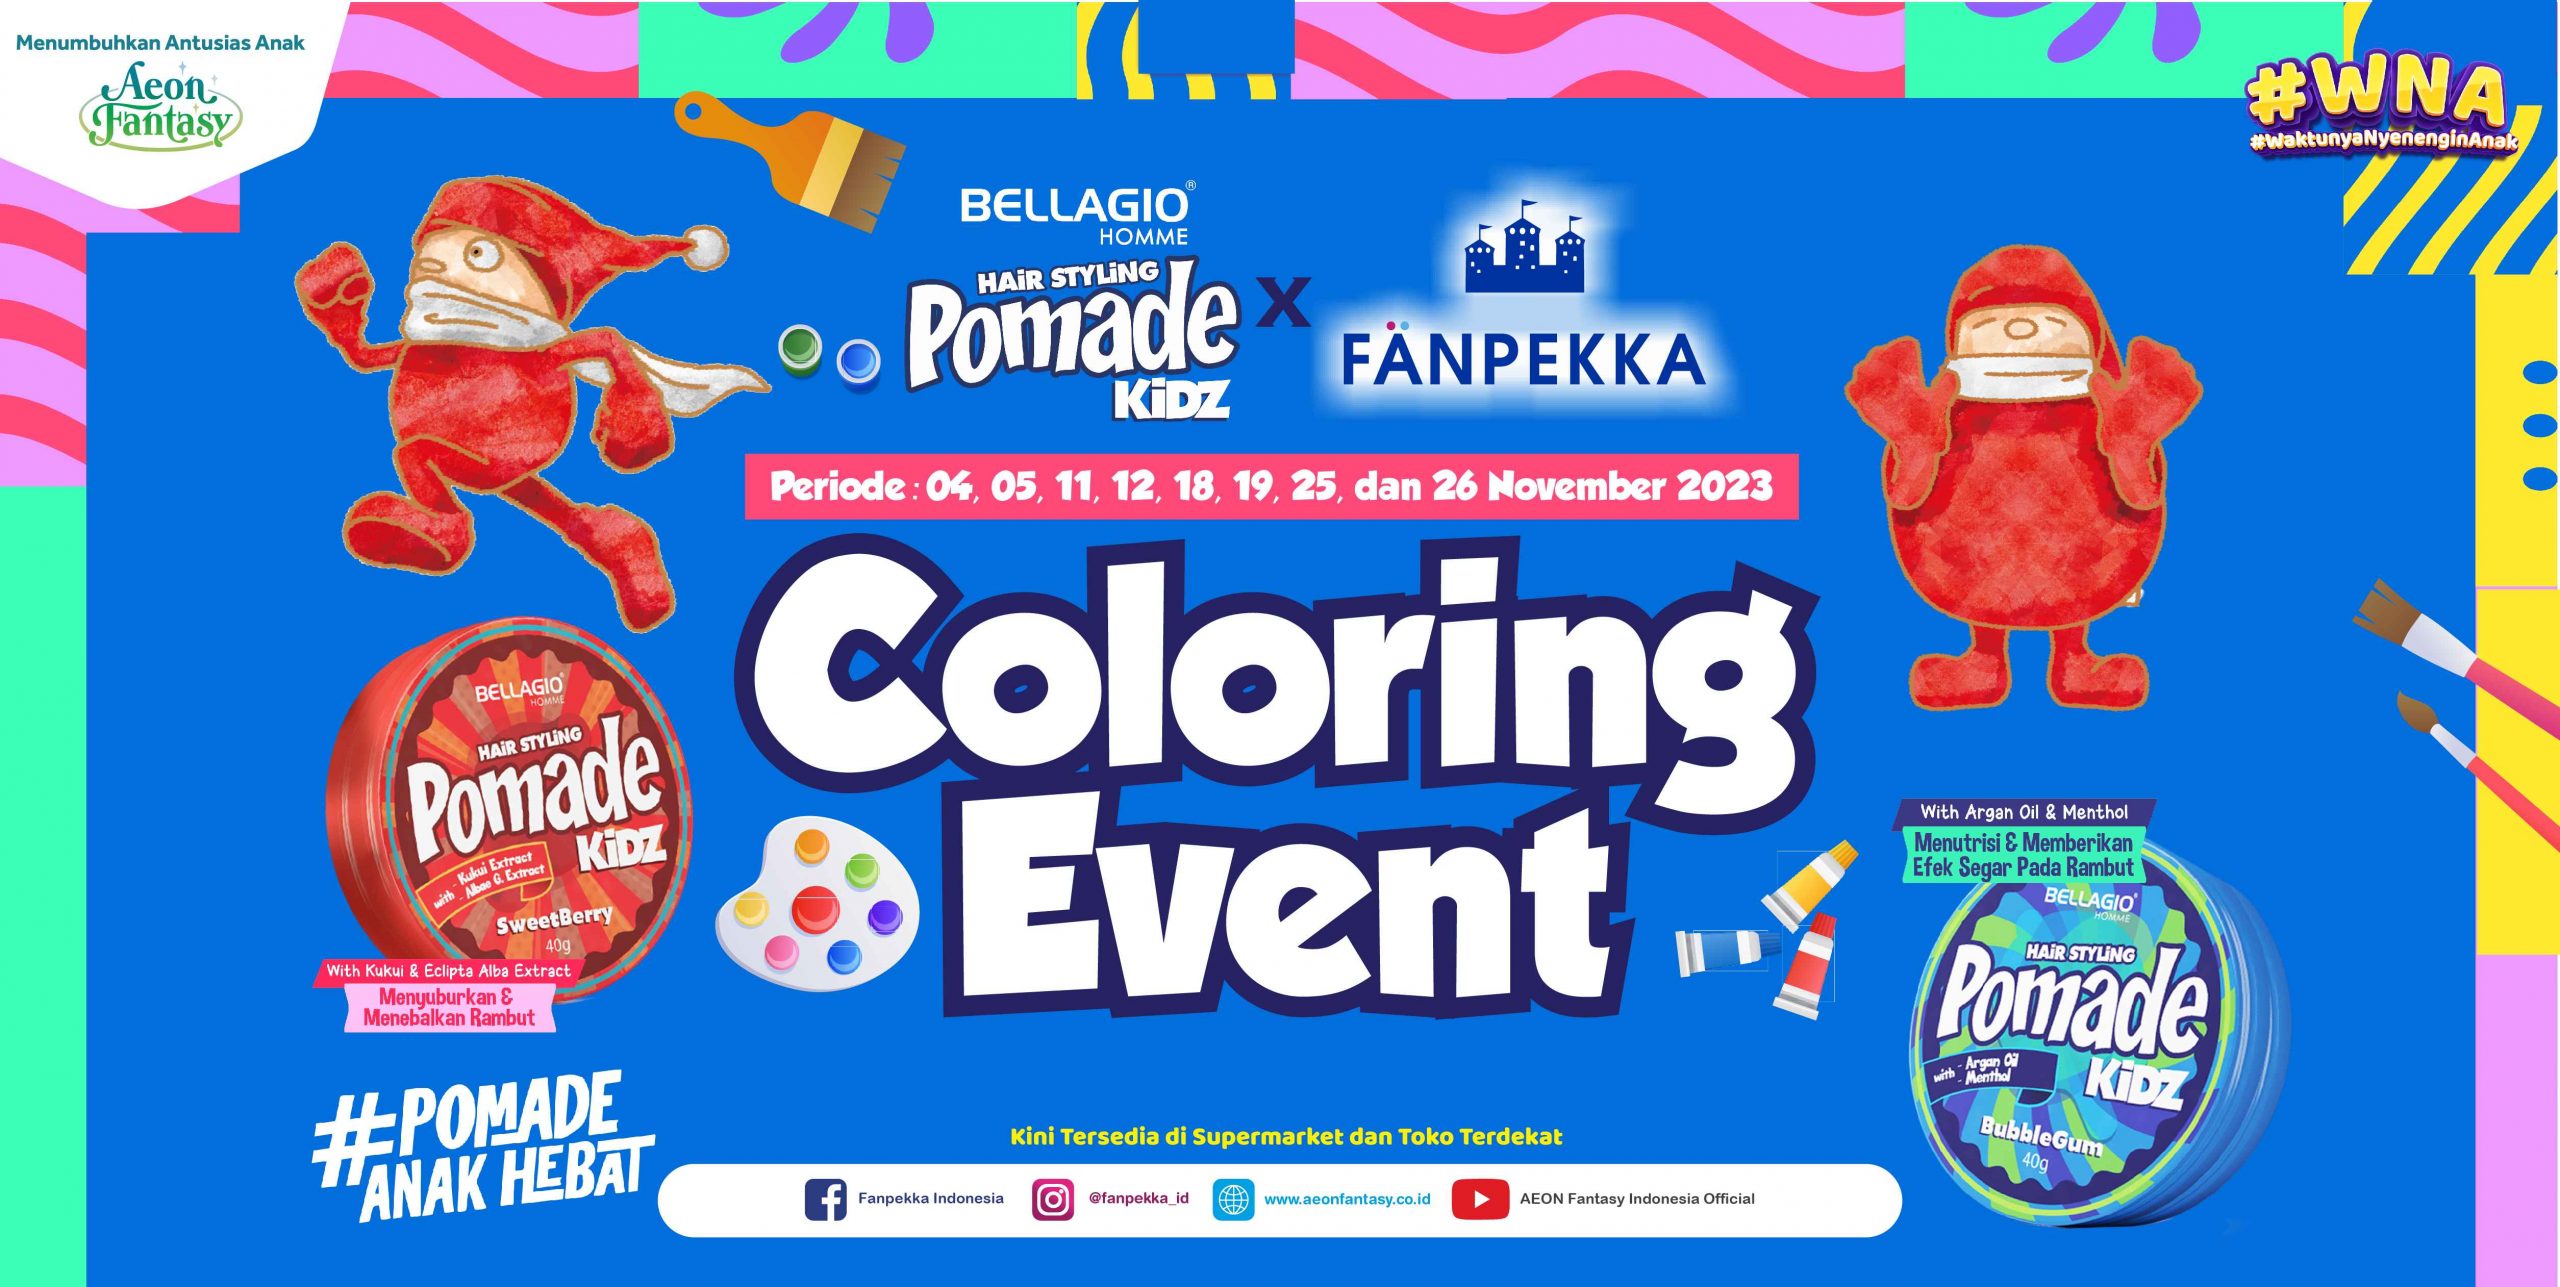 [Fanpekka] Coloring Event Fanpekka X Bellagio Pomade Kidz